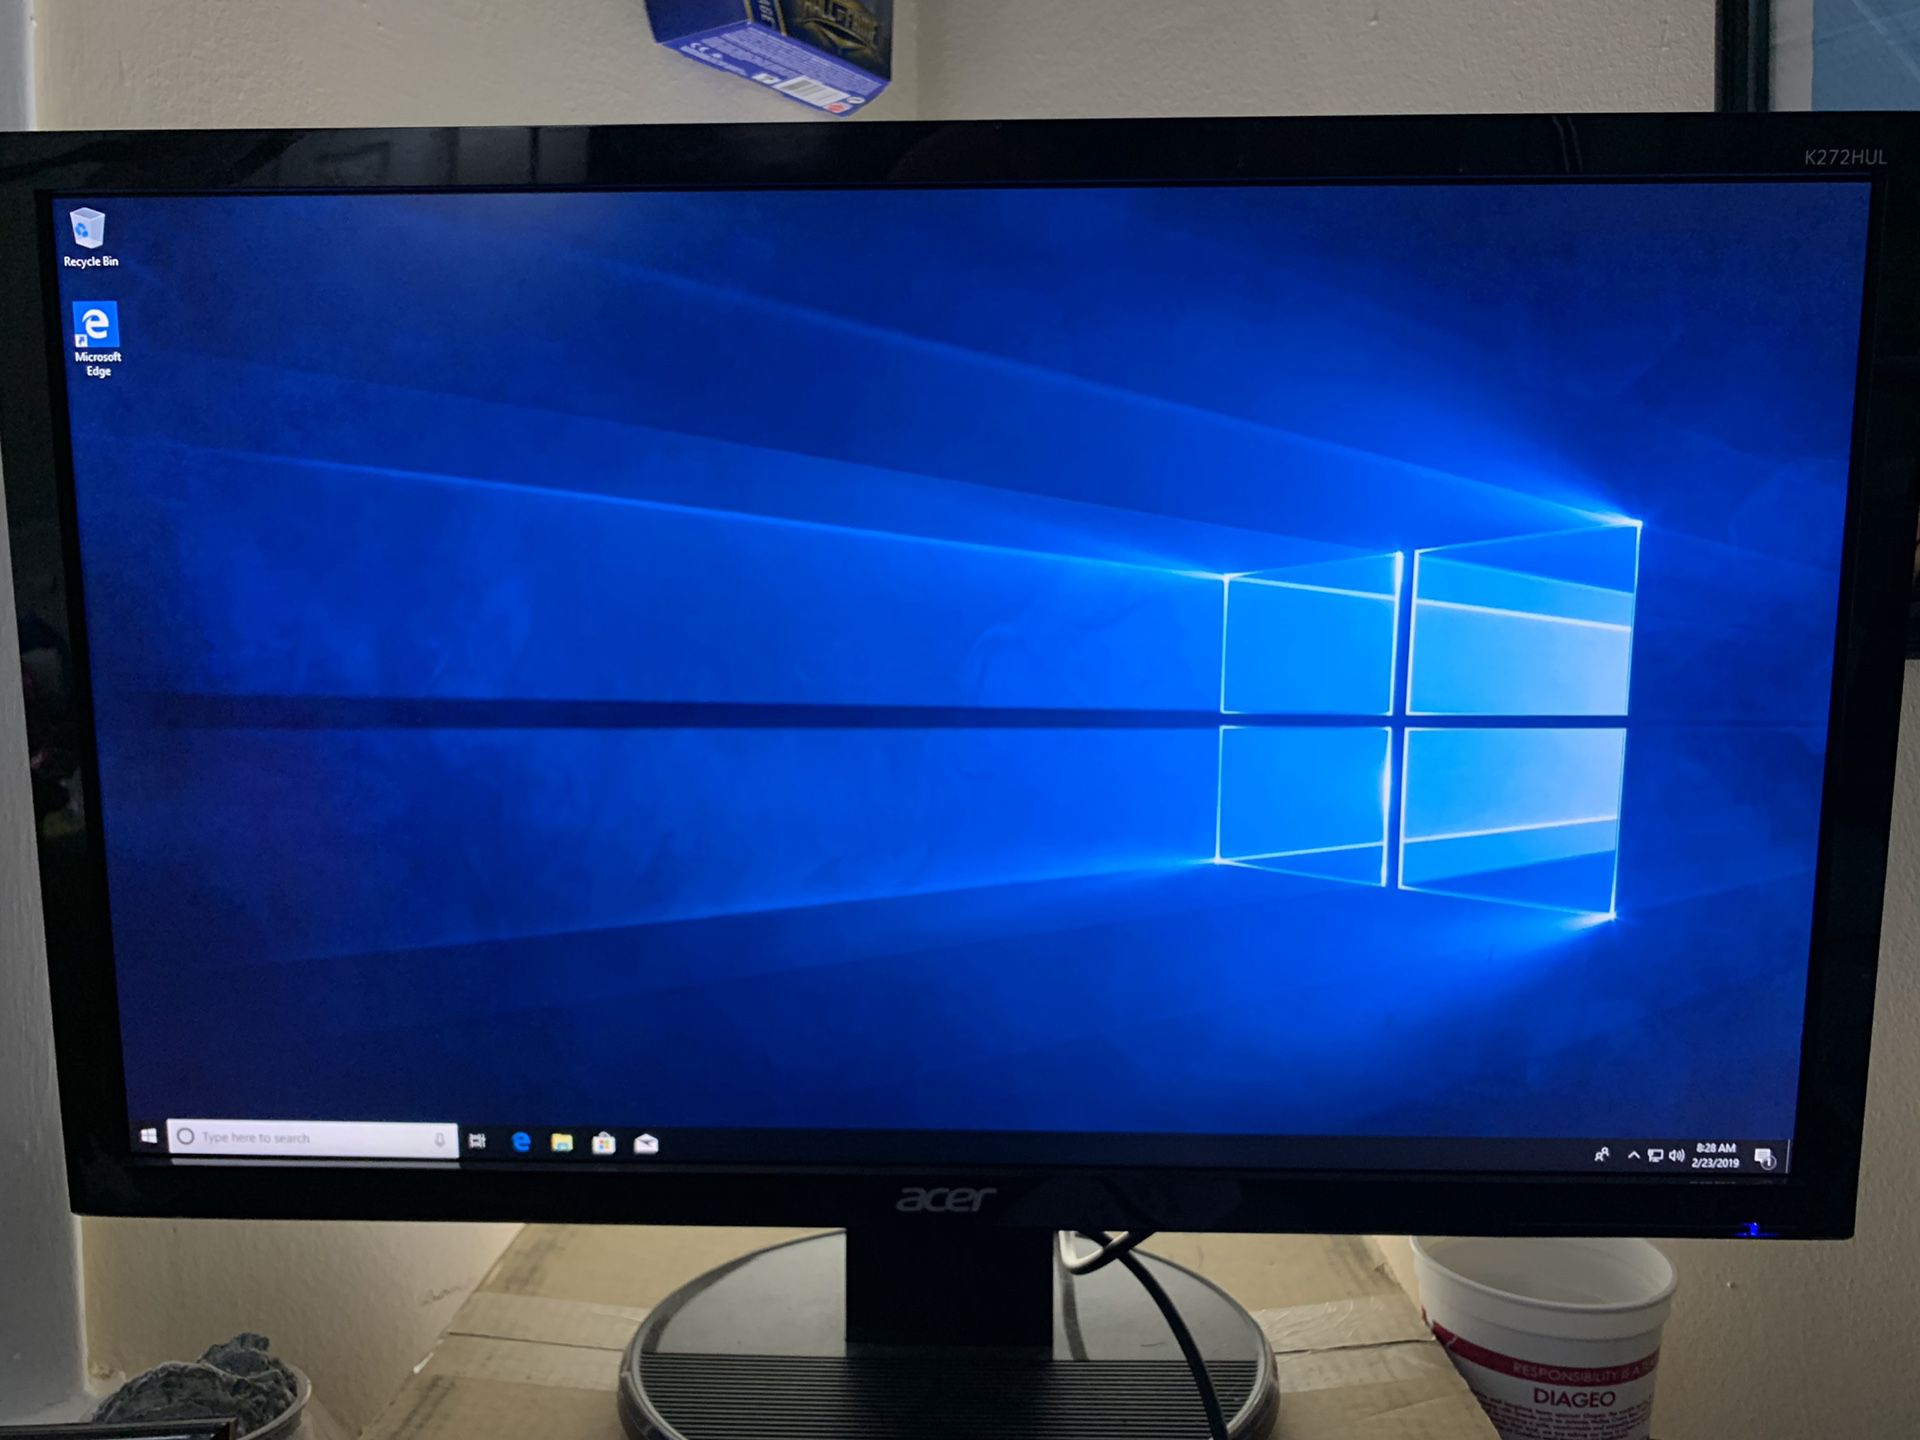 HP Windows 10 desktop